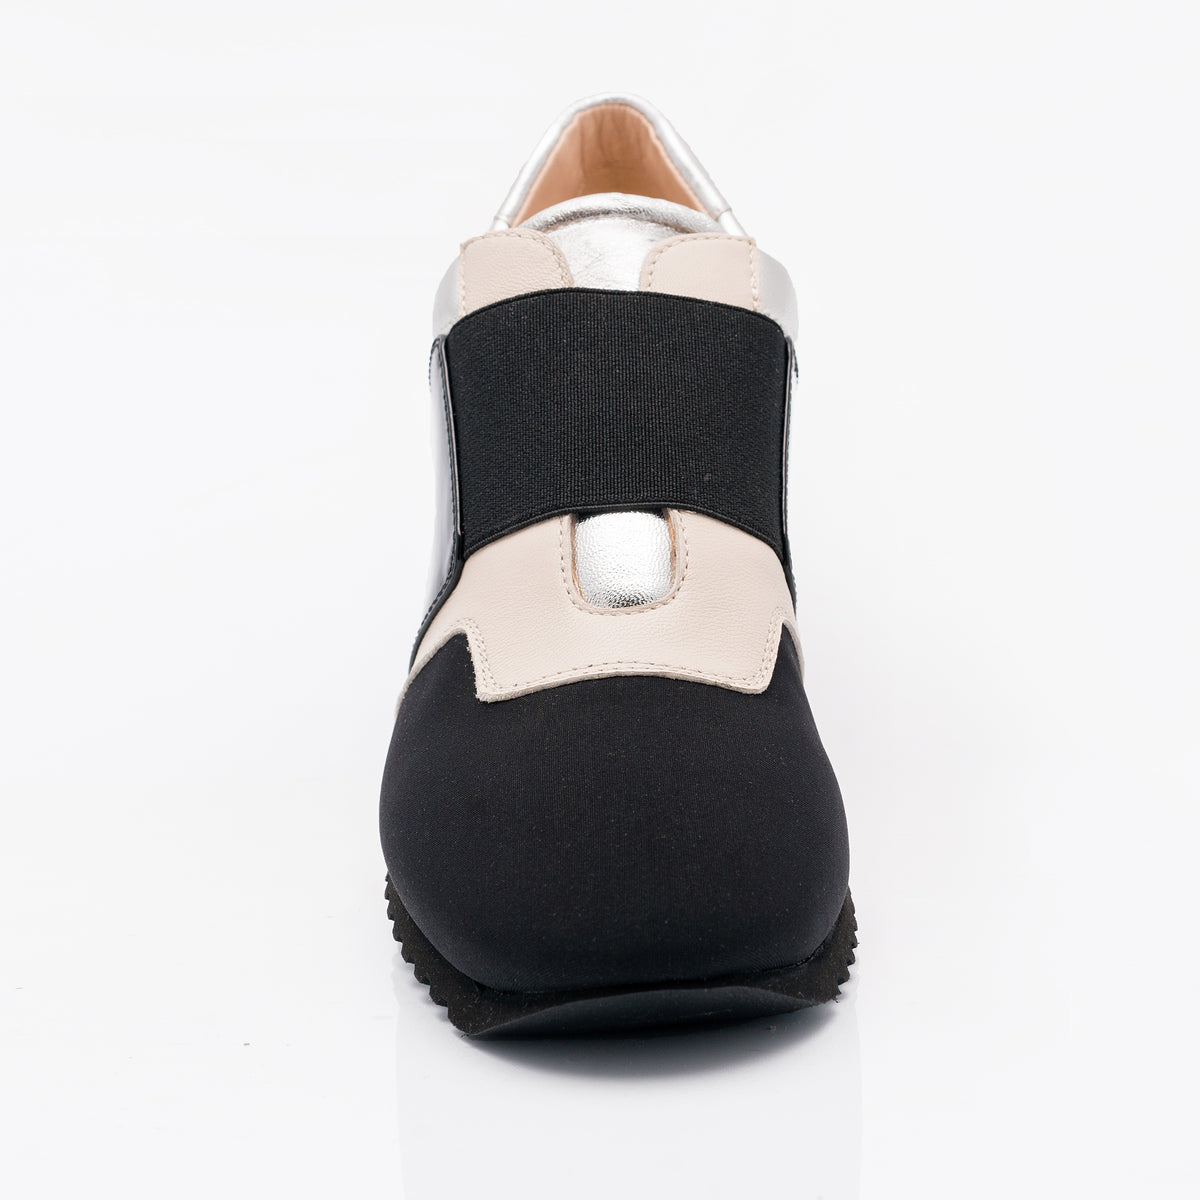 LA Chic Multi Leather slip on Wedge Sneaker Black/Silver